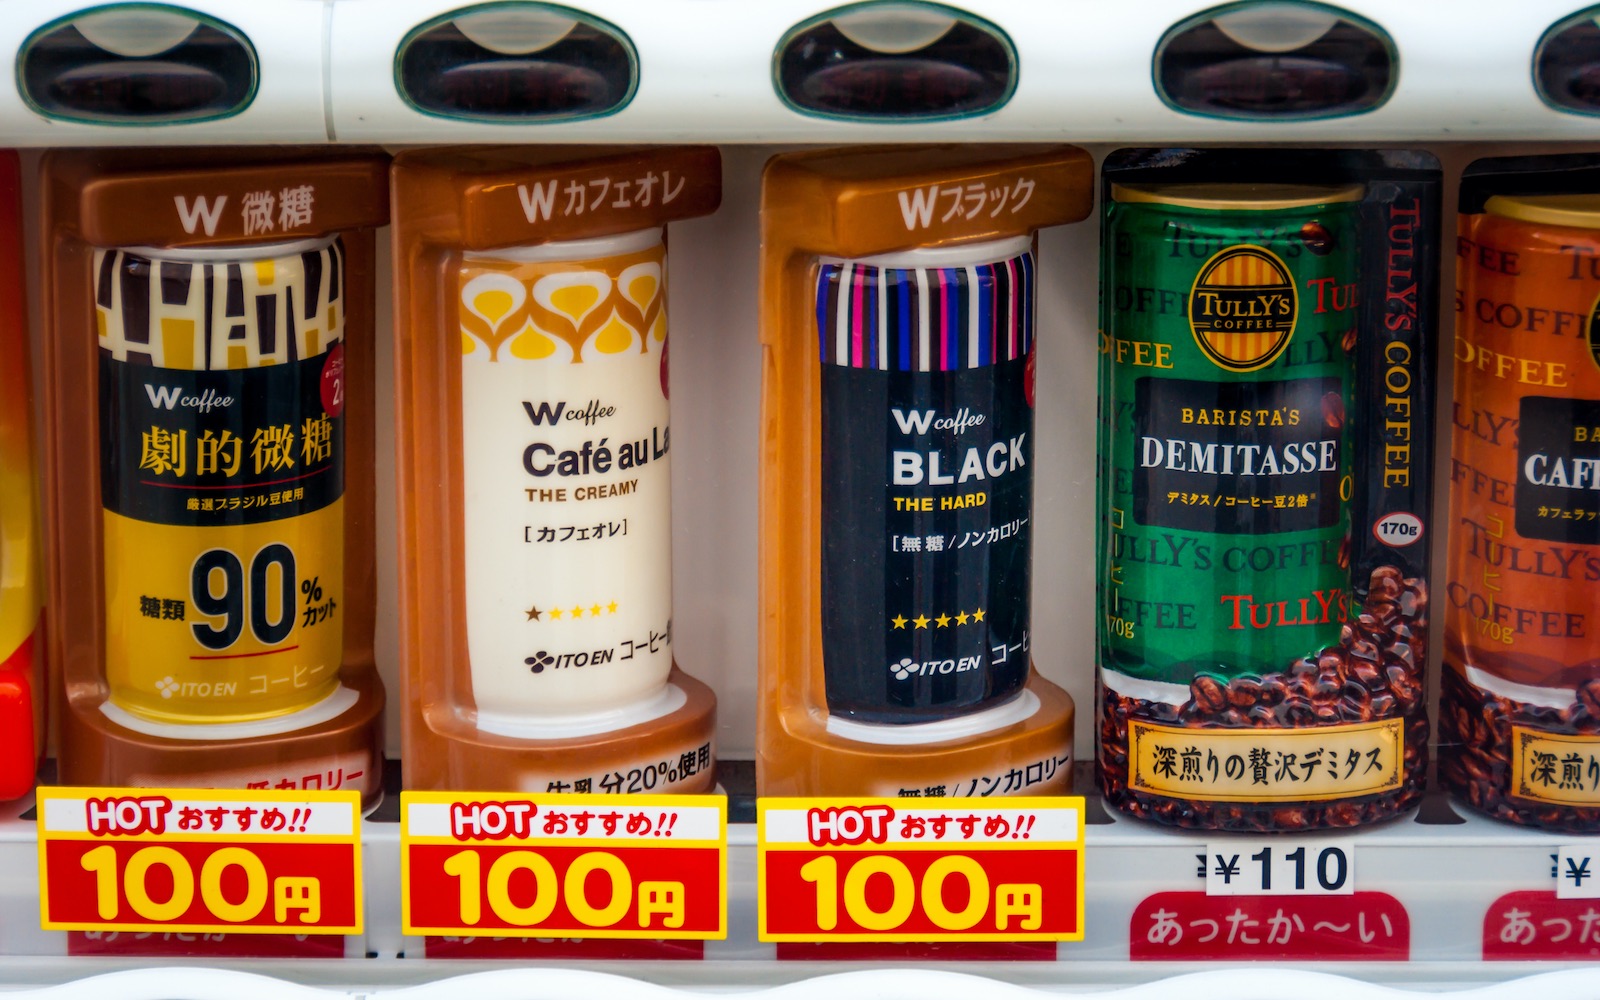 iStock-ColobusYeti-canned-coffee-vending-machine.jpg